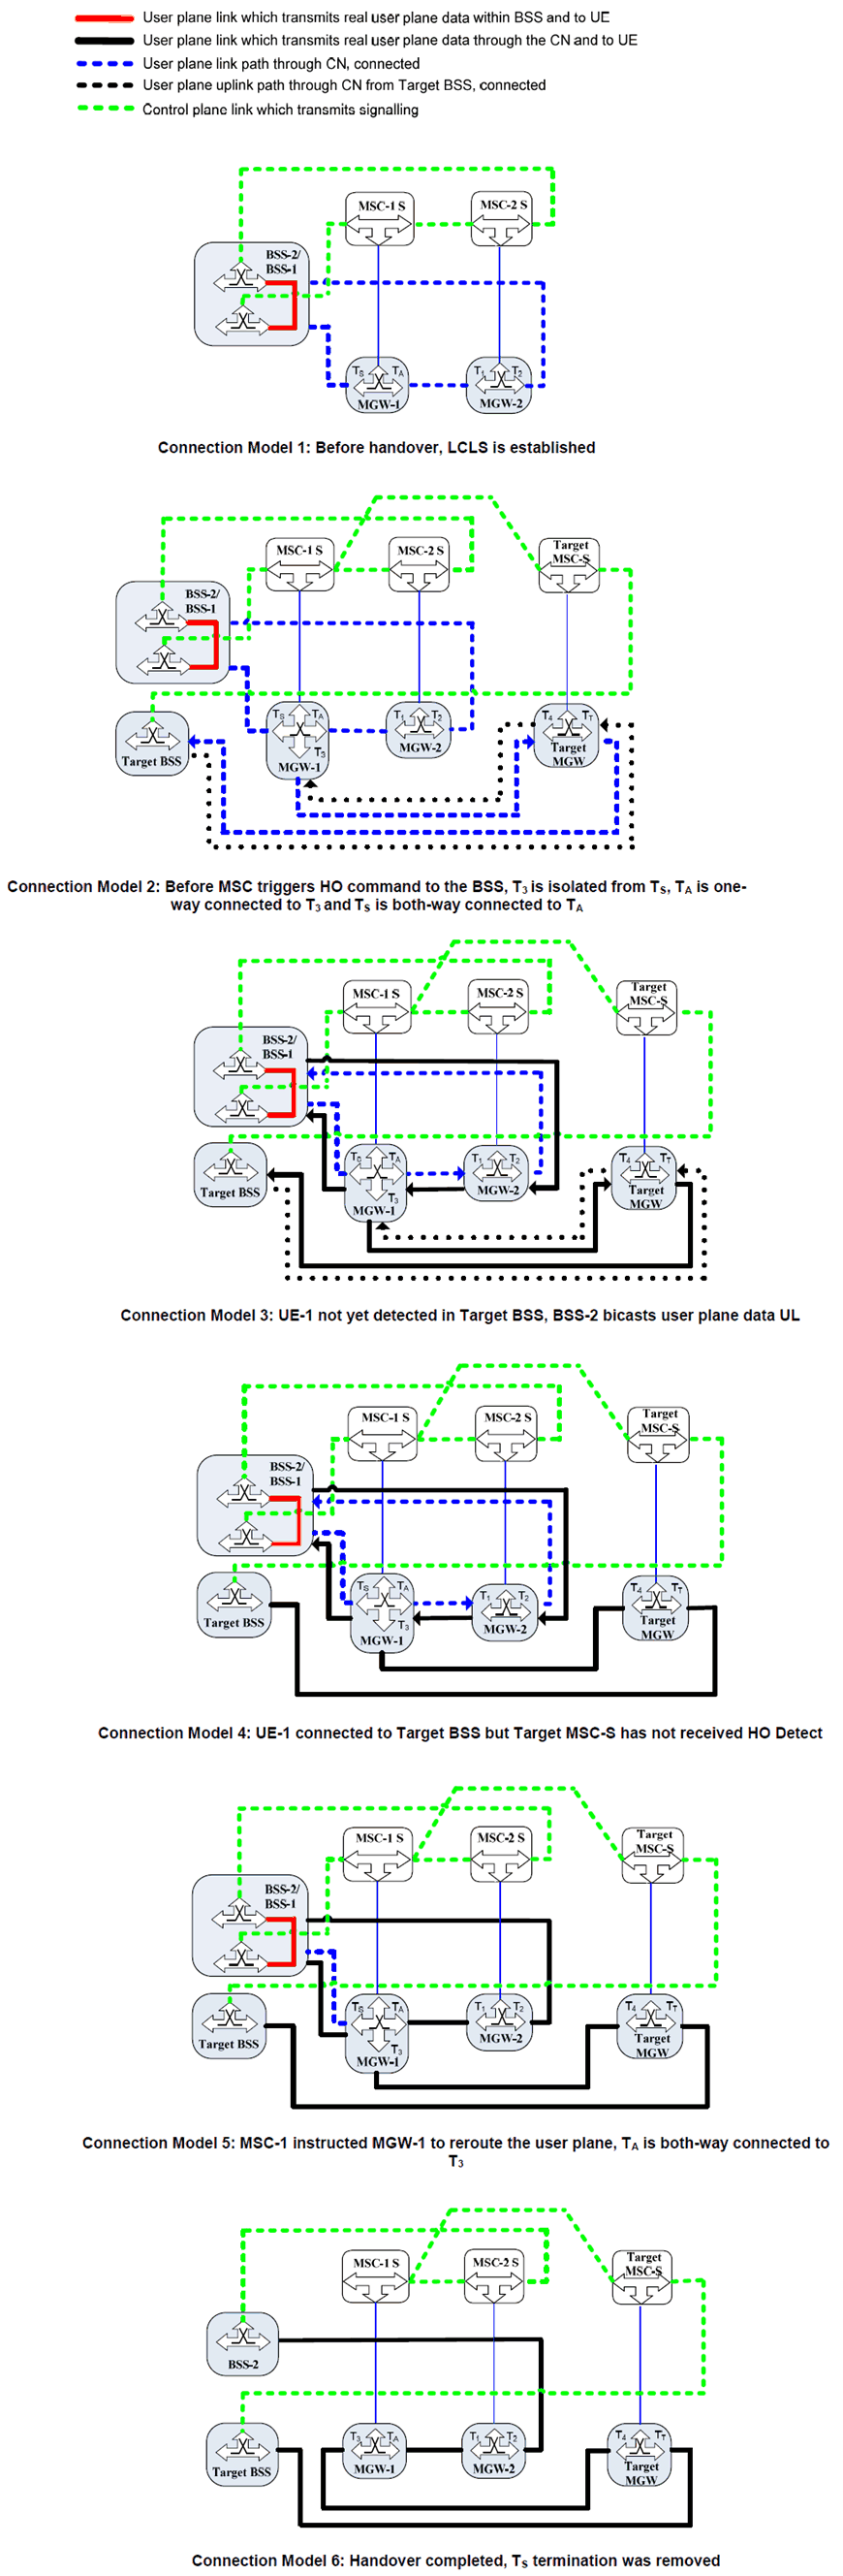 Copy of original 3GPP image for 3GPP TS 23.284, Fig. 8.4.2.1.4.1.1: Inter-MSC Inter-BSS Handover Connection Model when user plane active